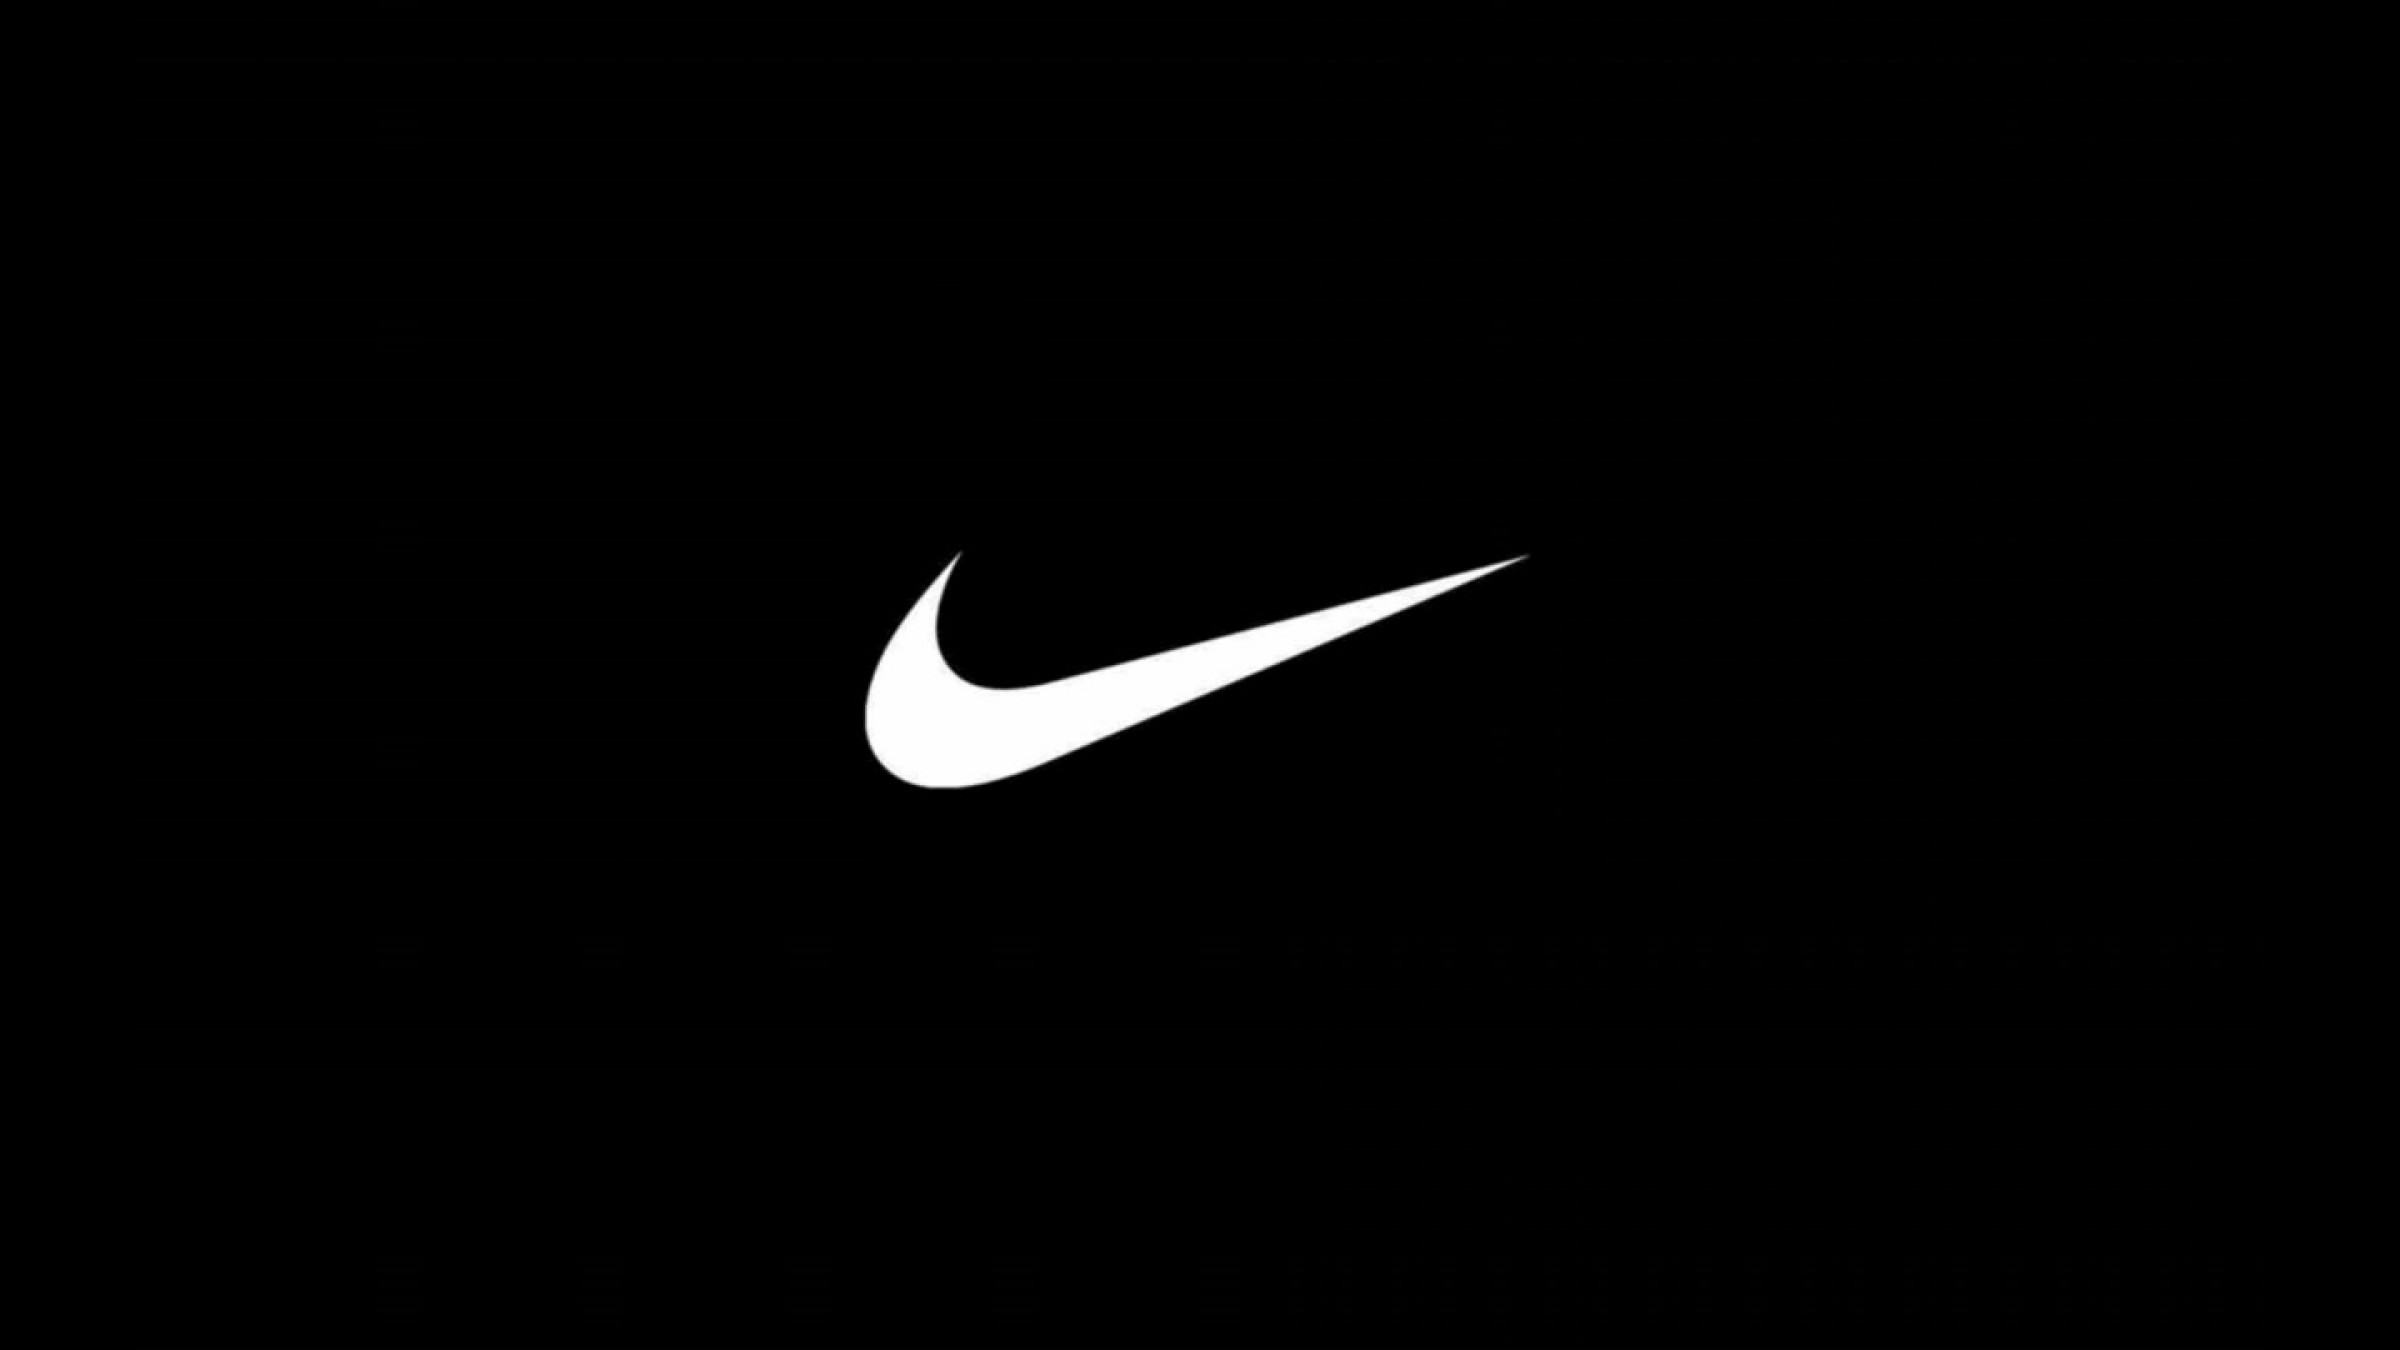 Nike Logos Mobile Desktop Free Hd Wallpaper